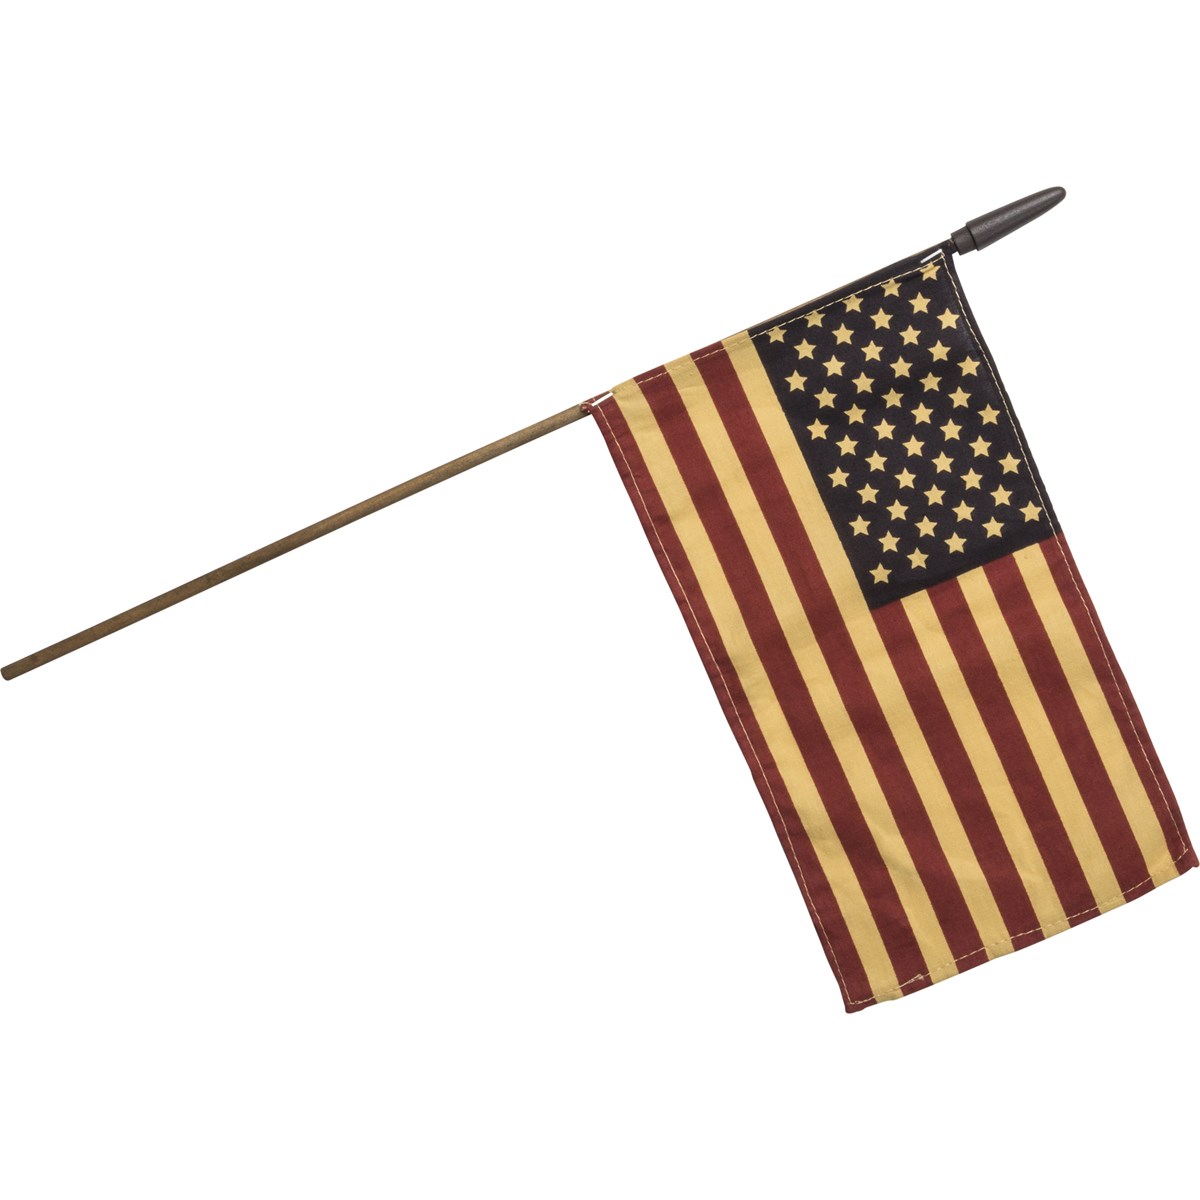 Primitive Medium American Flag - Fabric, Wood